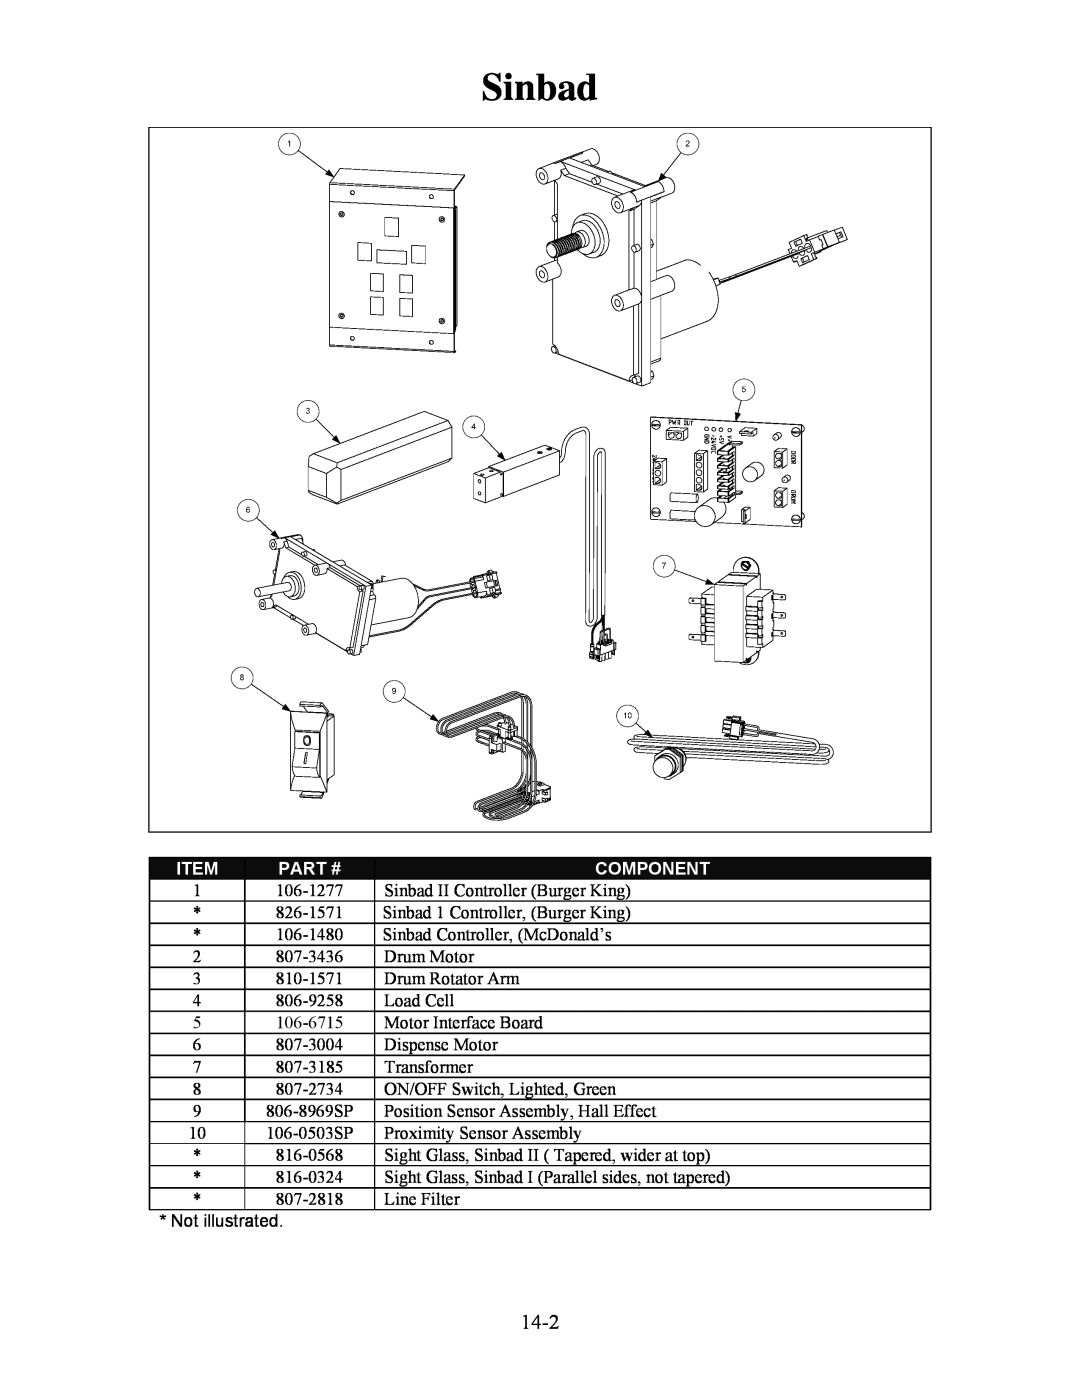 Frymaster H55 manual 14-2, Sinbad, Part #, Component 